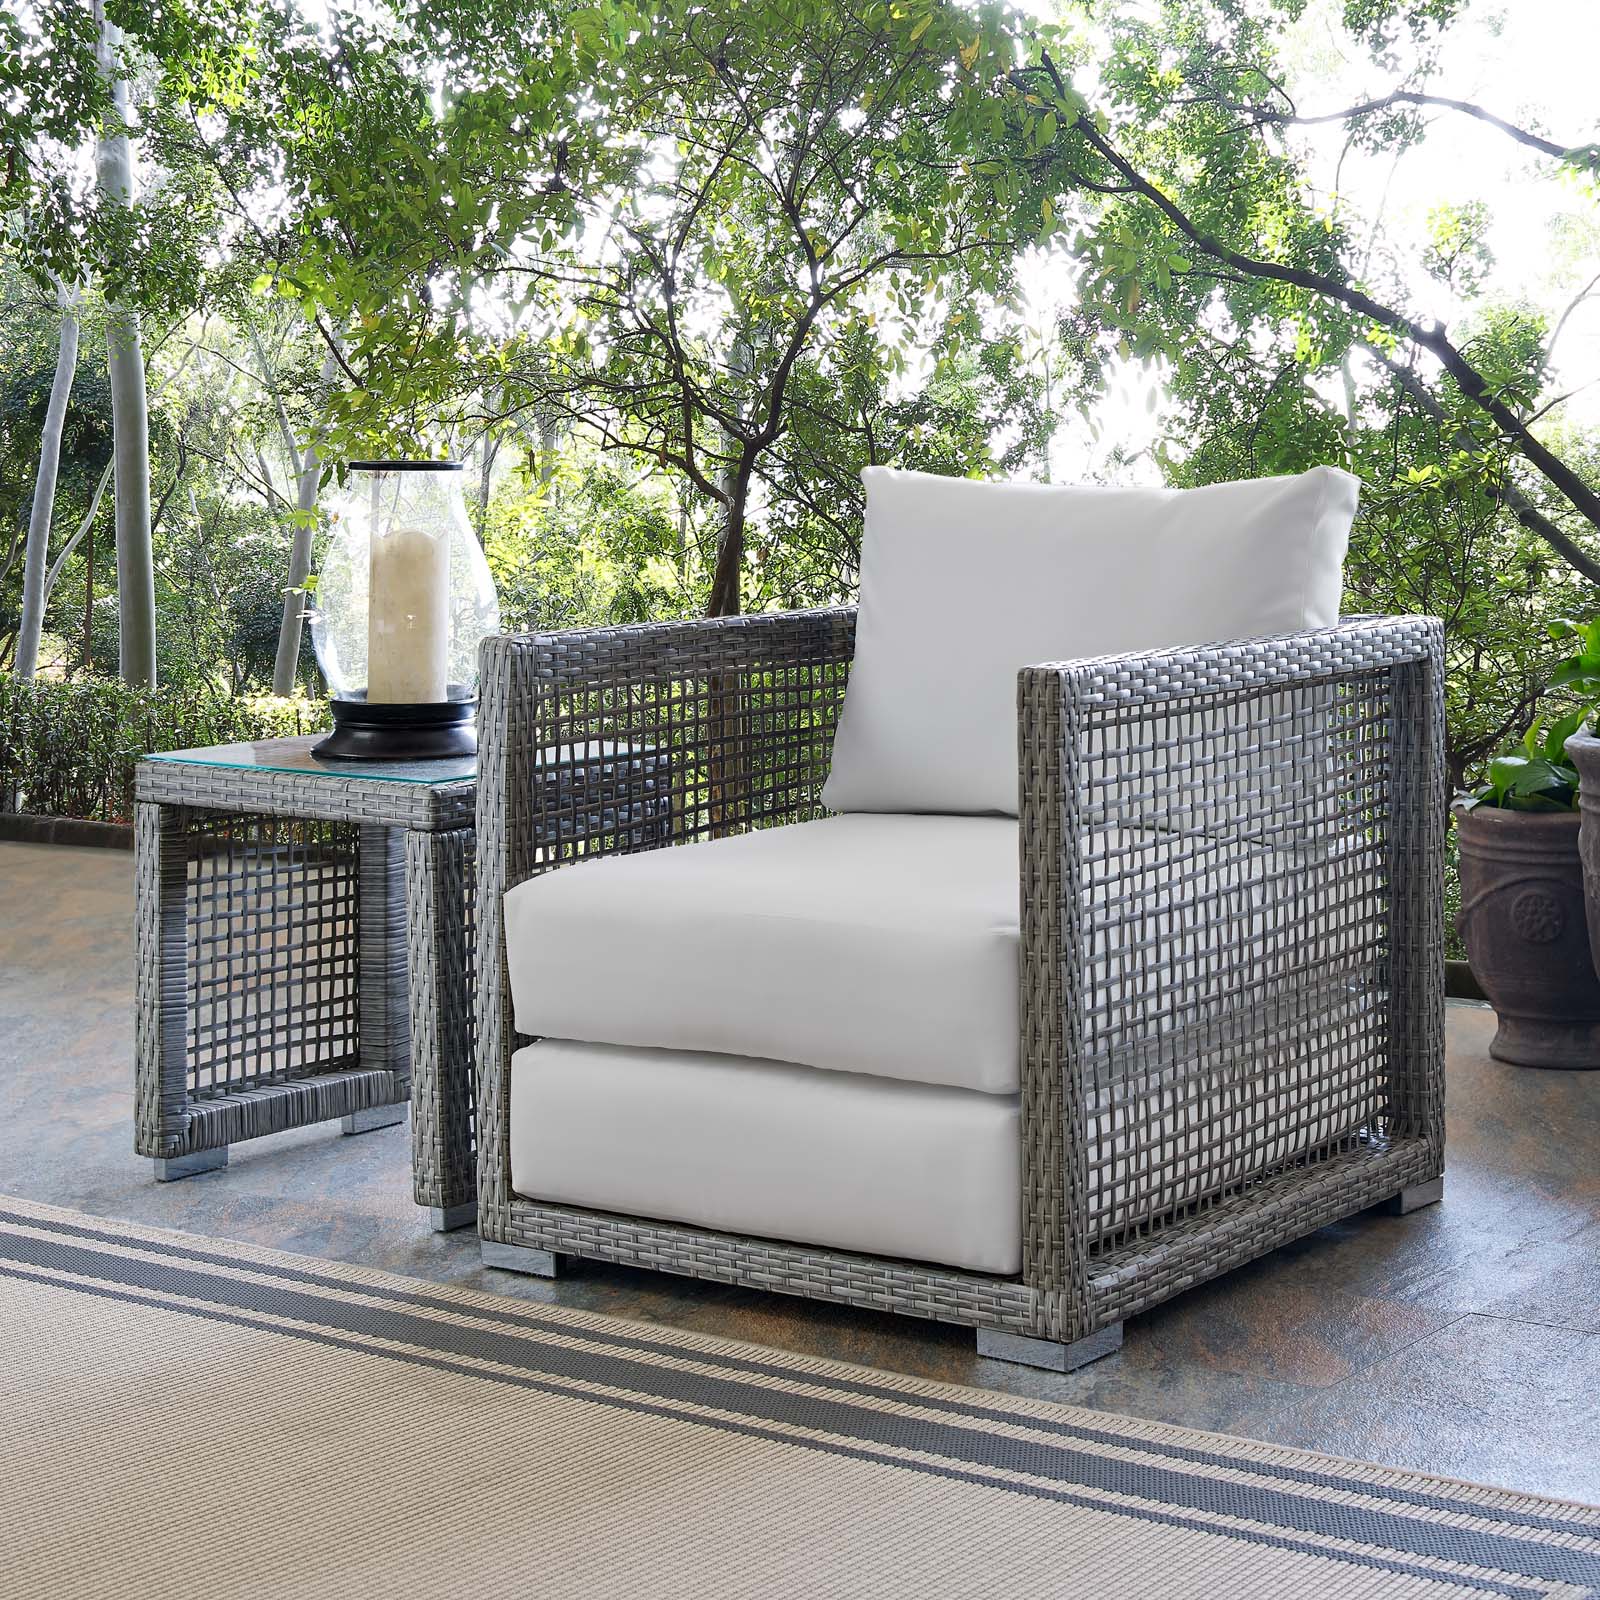 Modern Contemporary Urban Design Outdoor Patio Balcony Garden Furniture Lounge Chair Armchair, Rattan Wicker, Grey Gray White - image 5 of 6